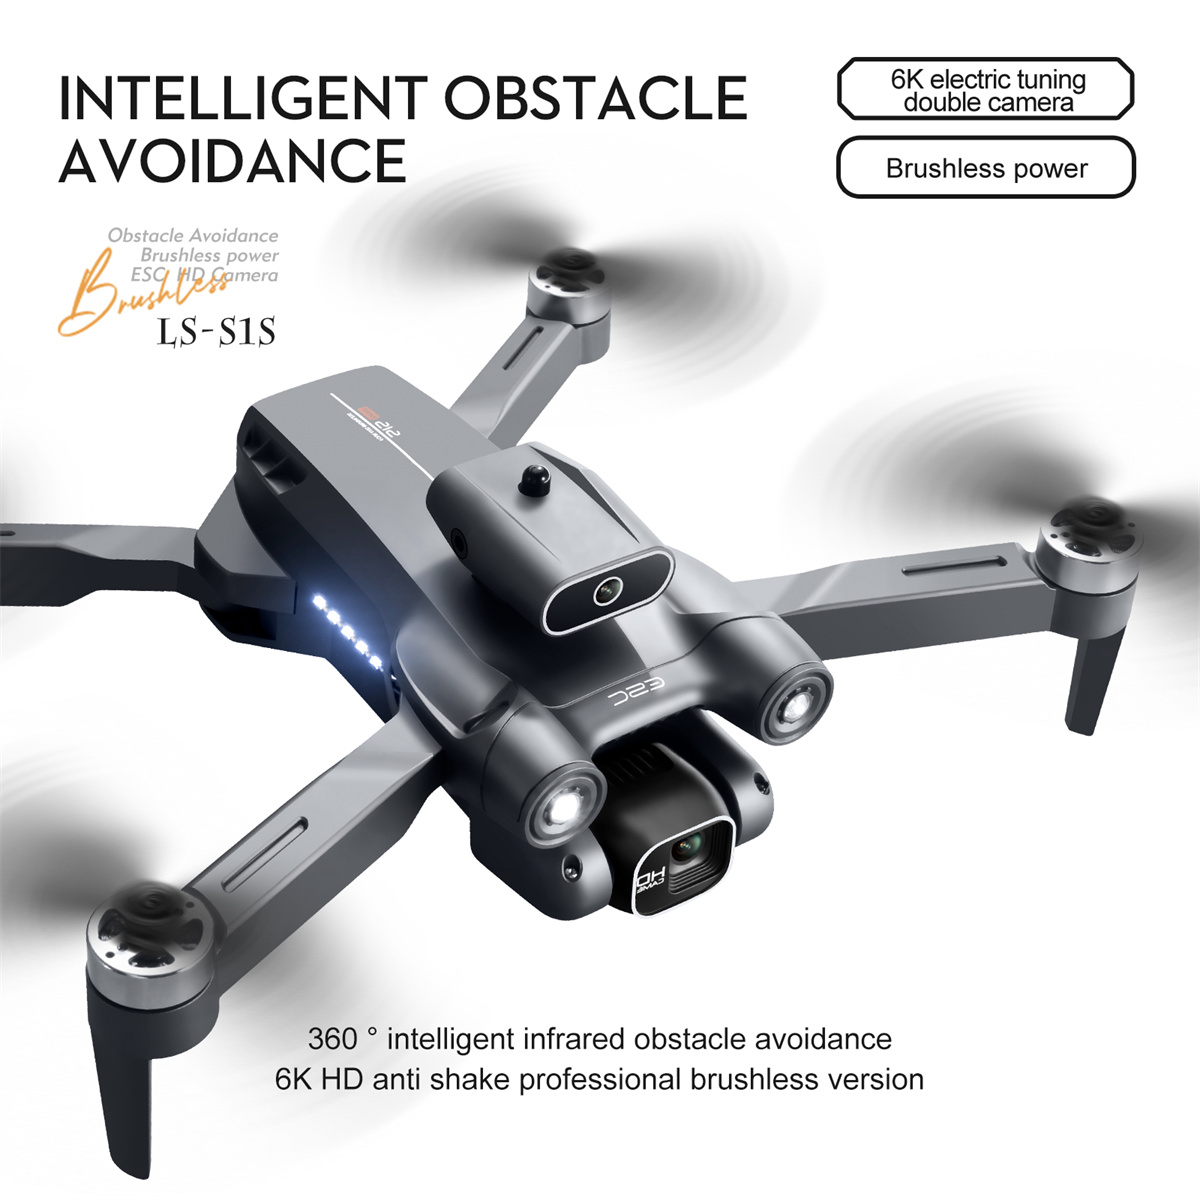 6K mit Drohnen, für Ultimativer Grey Kinder Drohne Kamera Quadrocopter Dark BYTELIKE